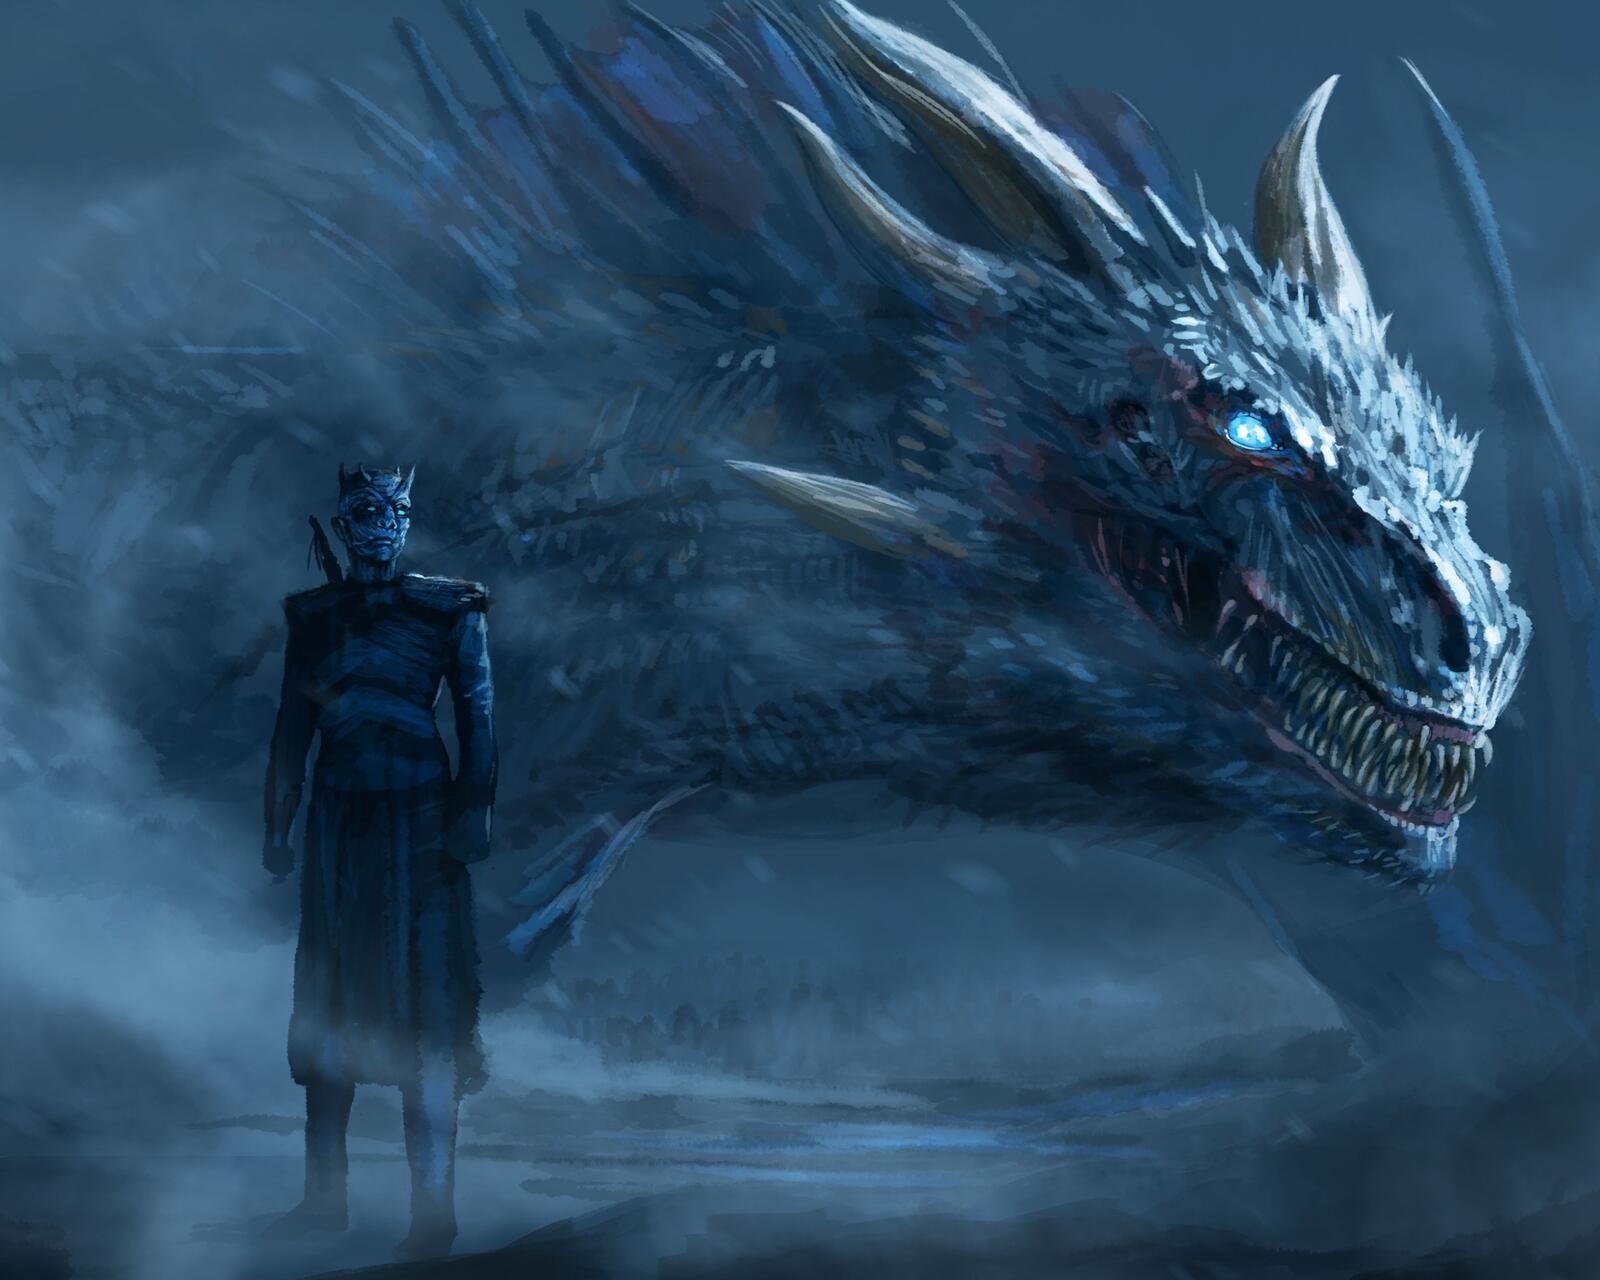 Wallpapers Game of thrones season 8 ice dragon on the desktop